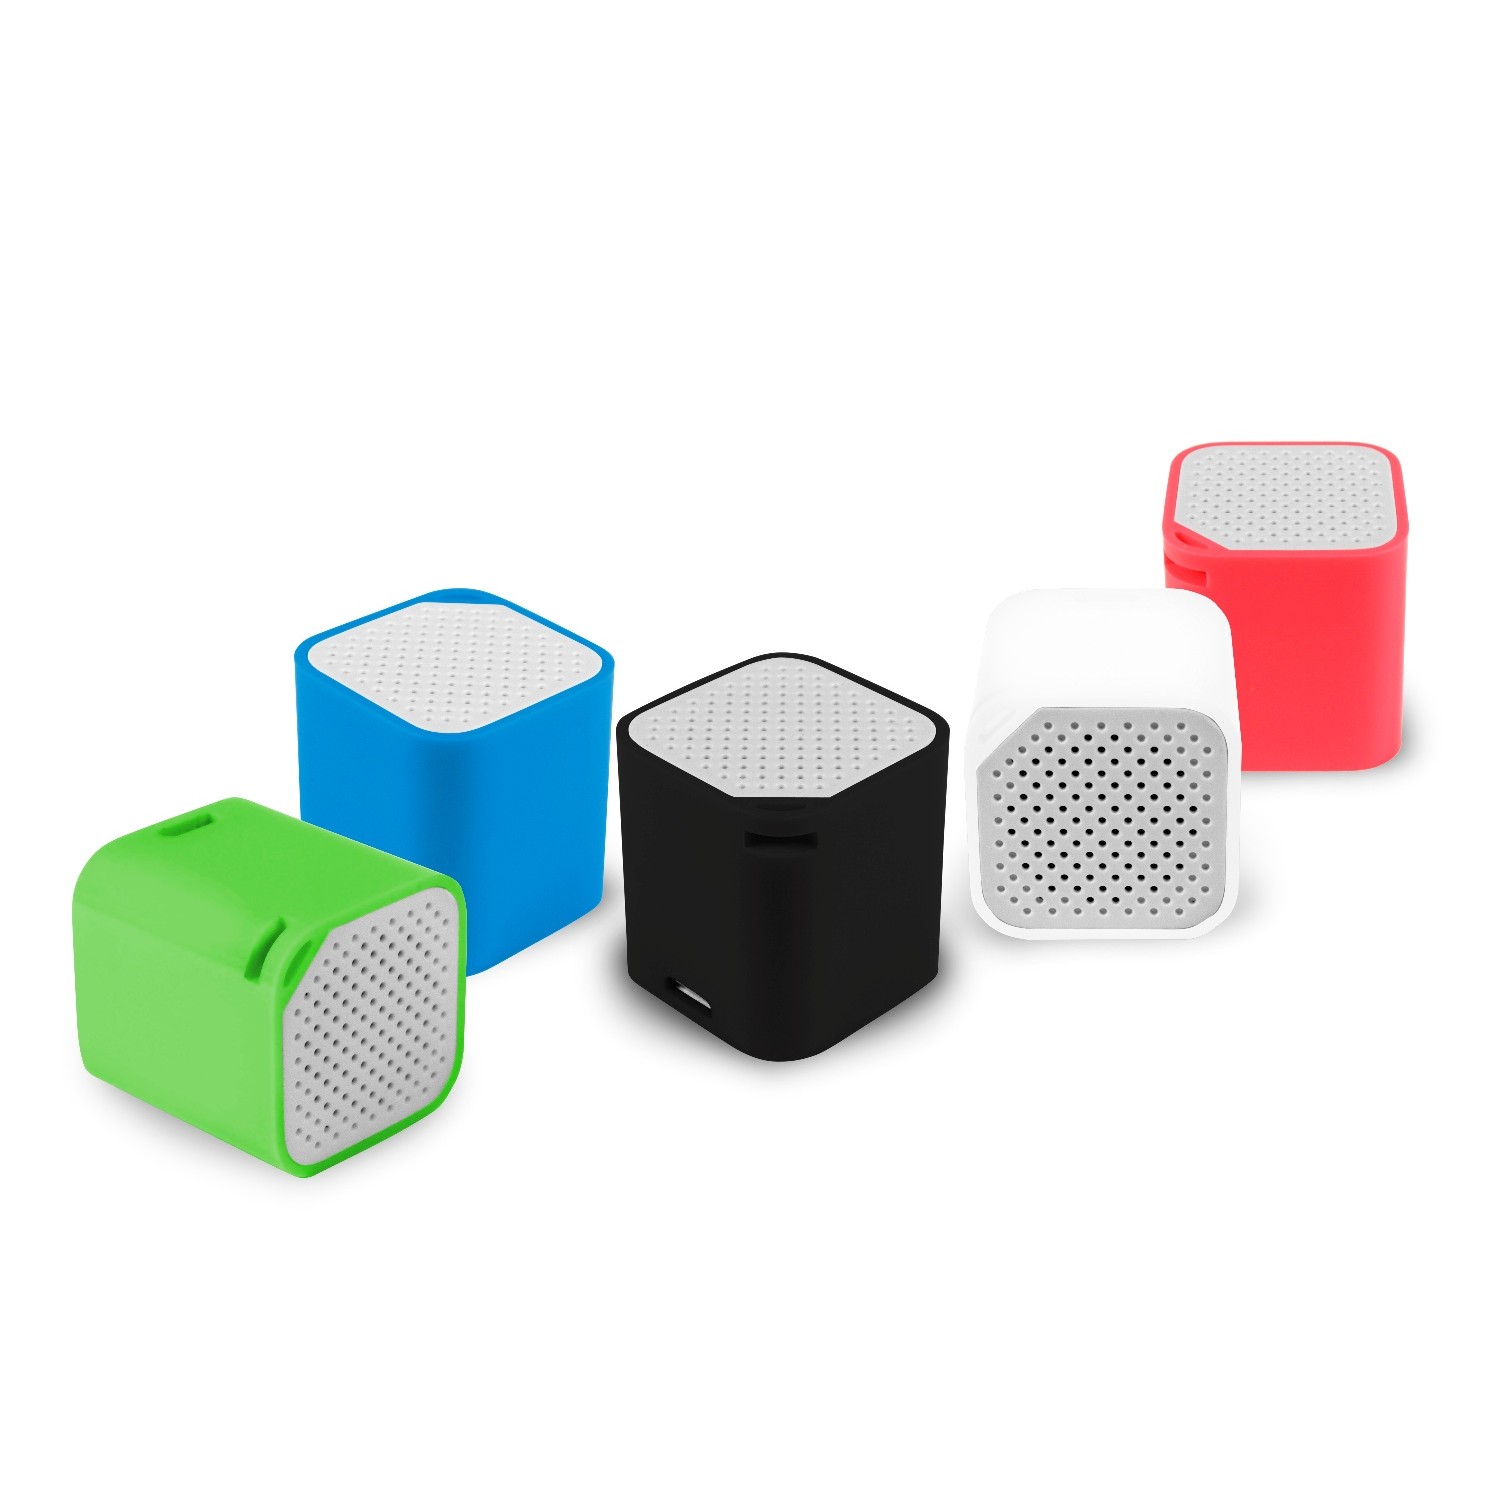 Groove Cube Shutter The world's smallest Bluetooth speaker, Blue (1441)